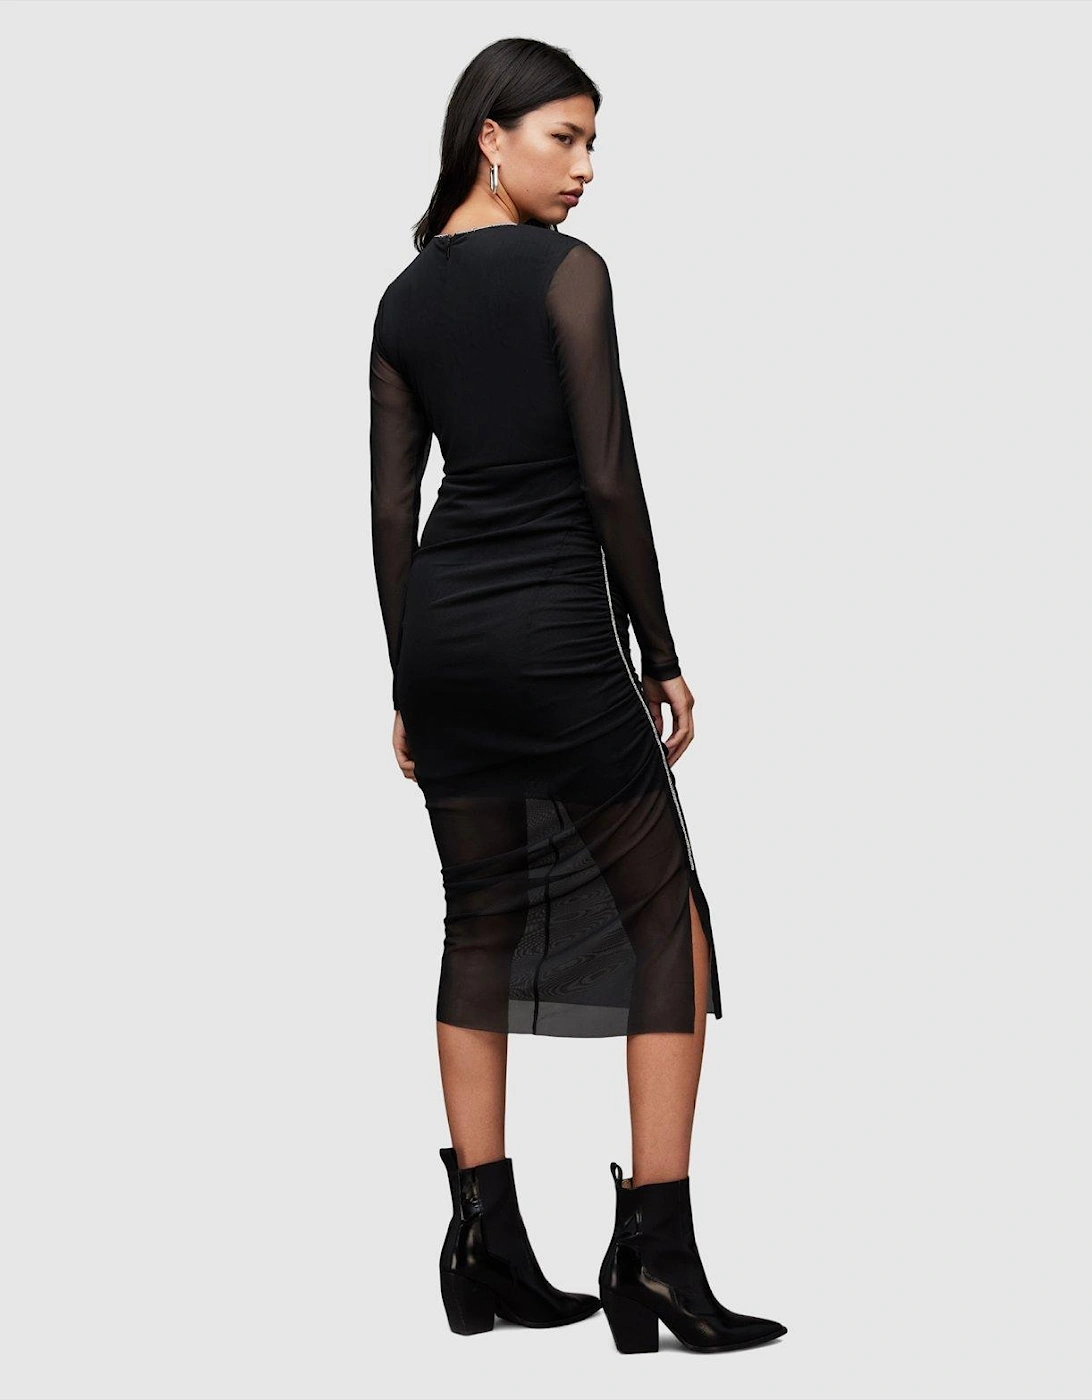 Nora Sparkle Dress - Black